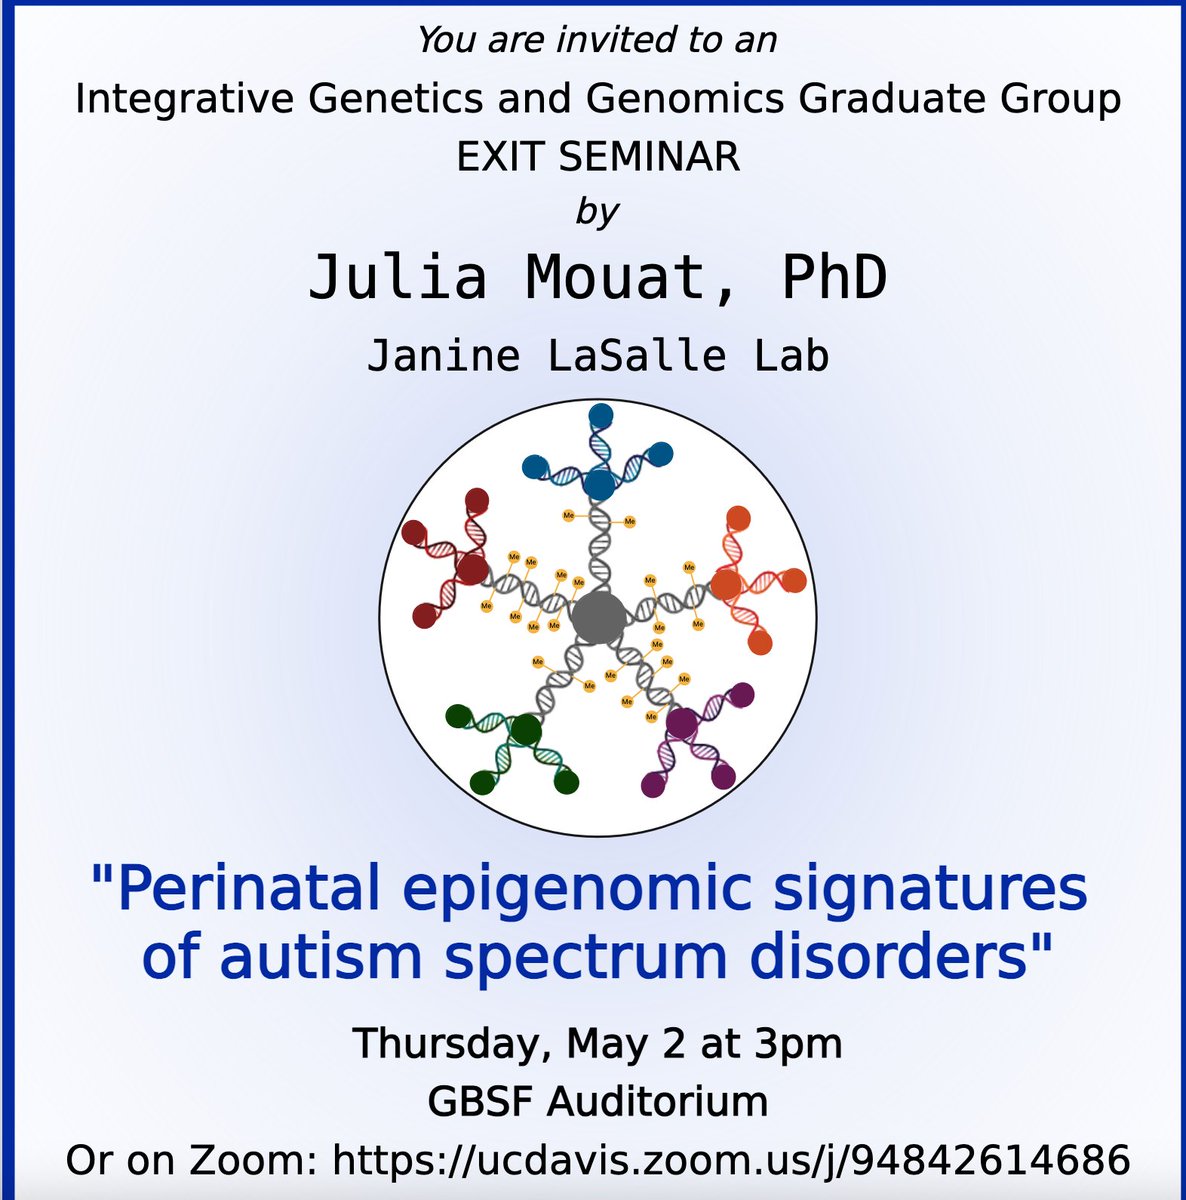 Exciting new research to be presented by Dr. Julia Mouat PhD! @UCDavisGenetics @BMCDB @PTXatUCD @UCDavisGrad